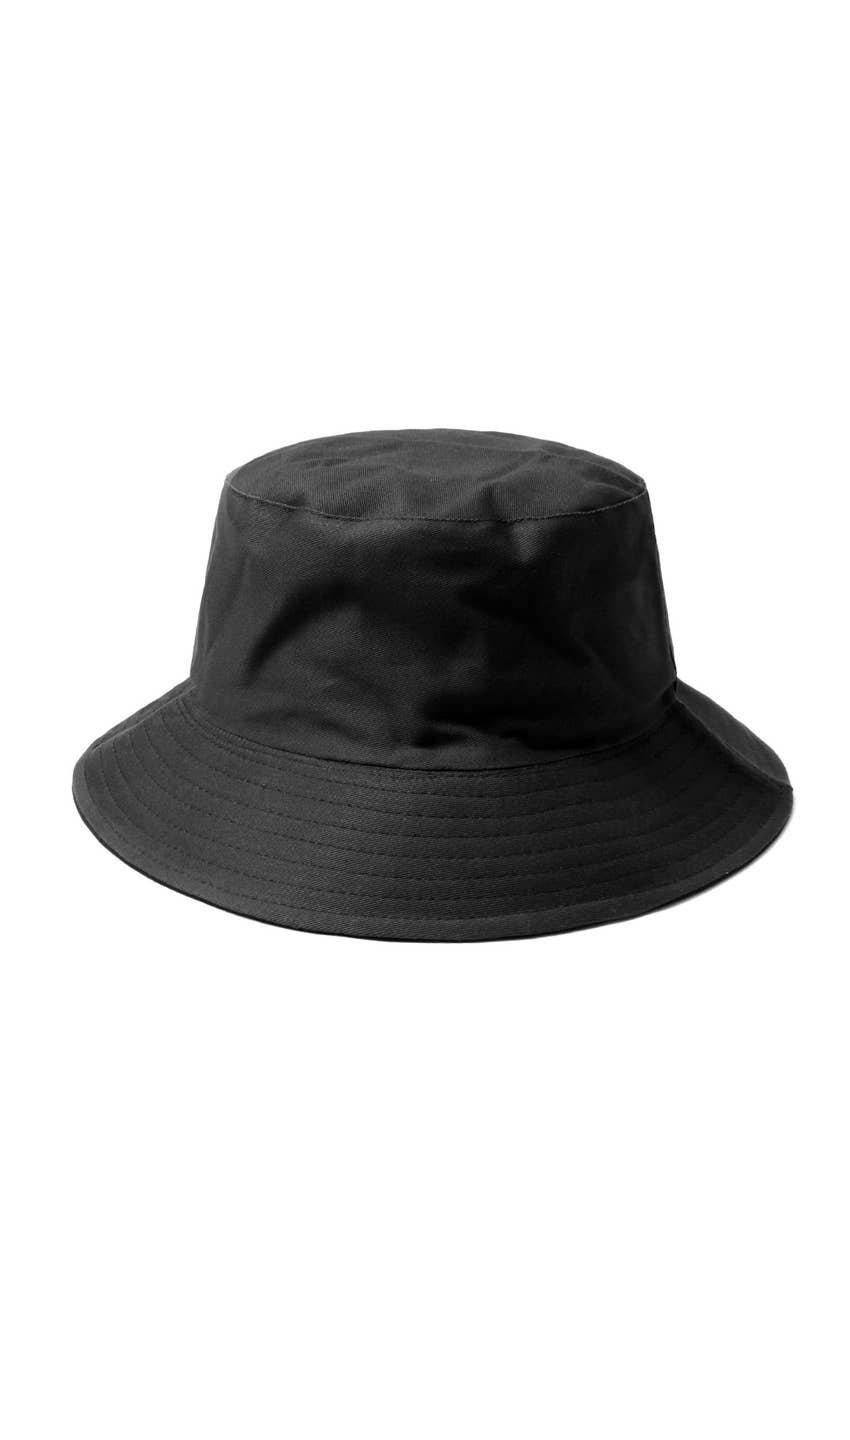 TAN/BLACK REVERSIBLE BUCKET HAT